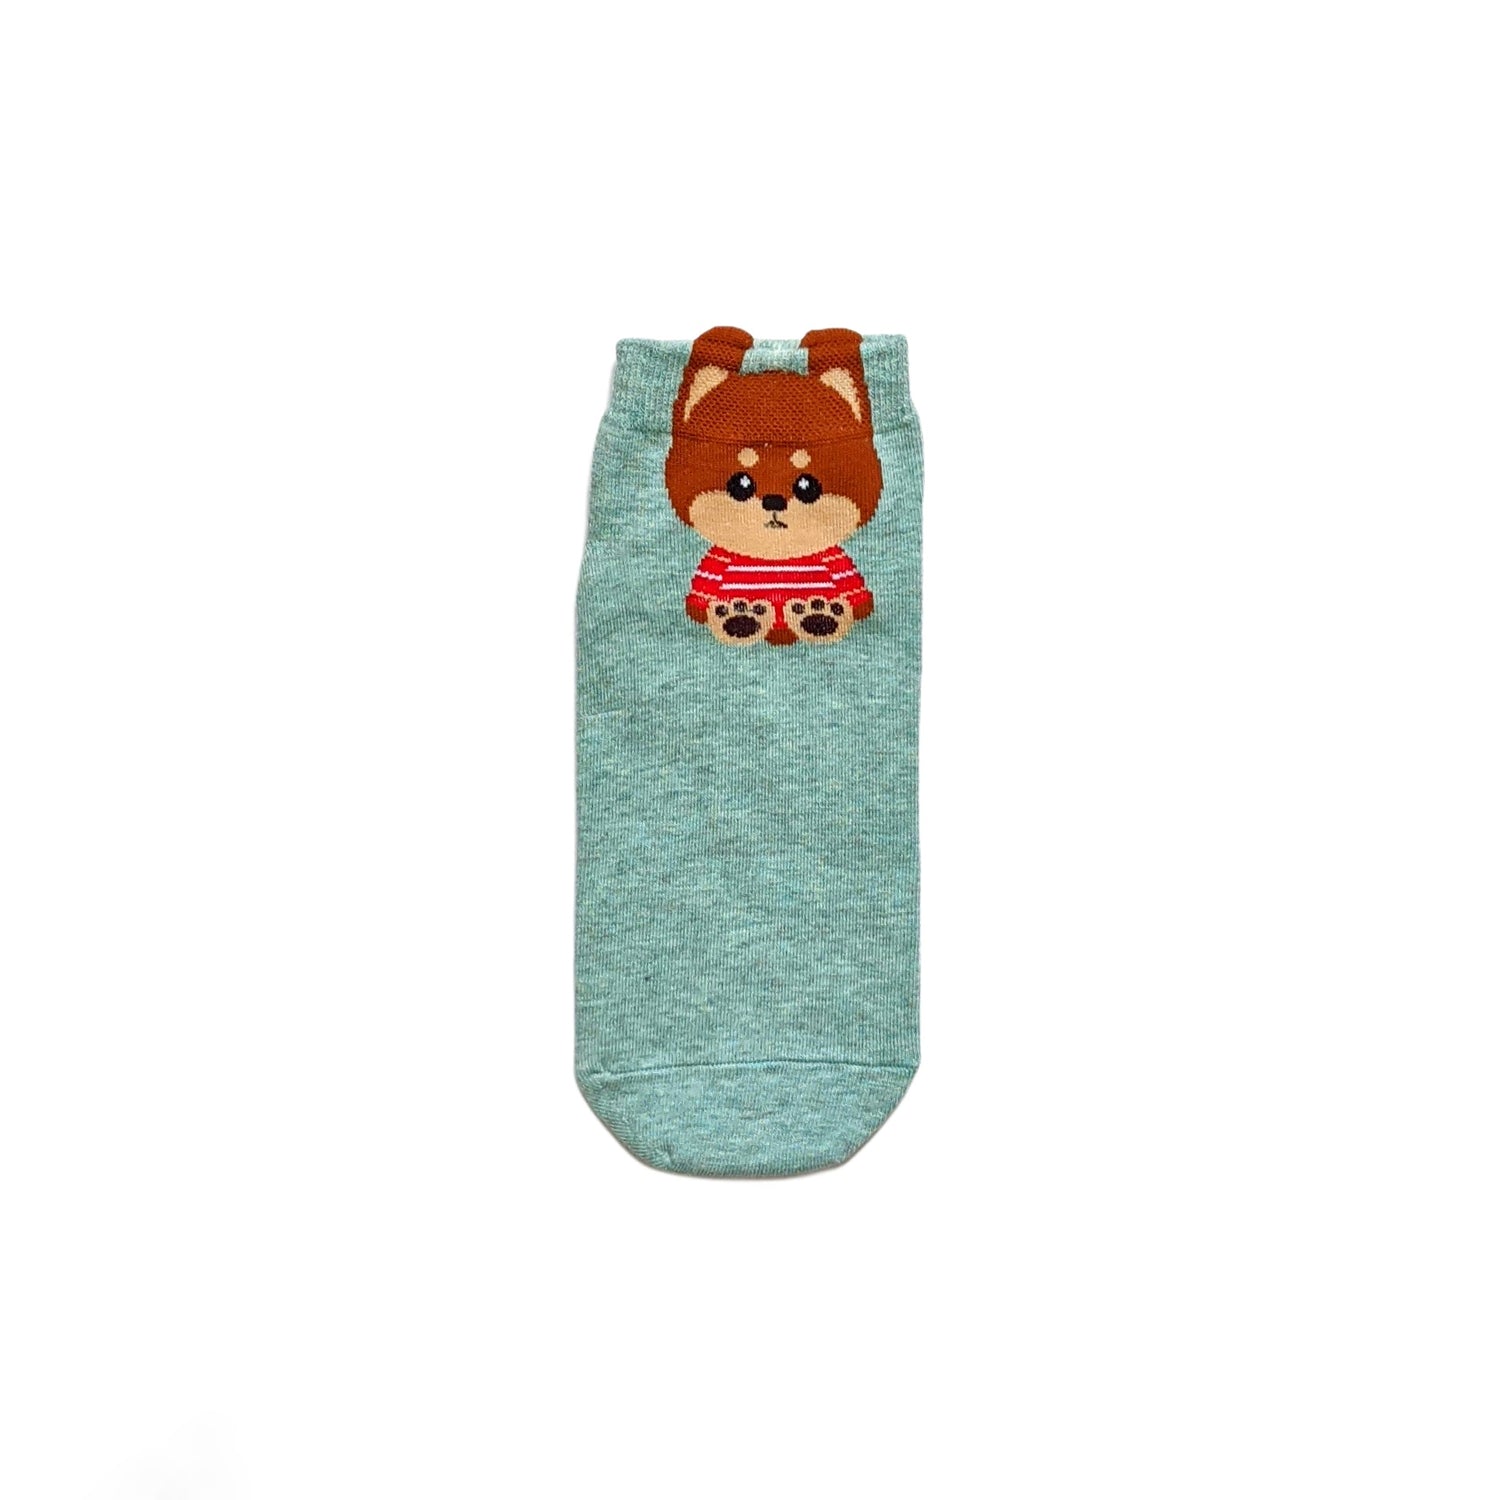 Panda Cat Dog Fox Bear Women Socks| Pink Socks | Cat Socks | Women Socks | Colorful Socks | Cute Socks | Animal Socks